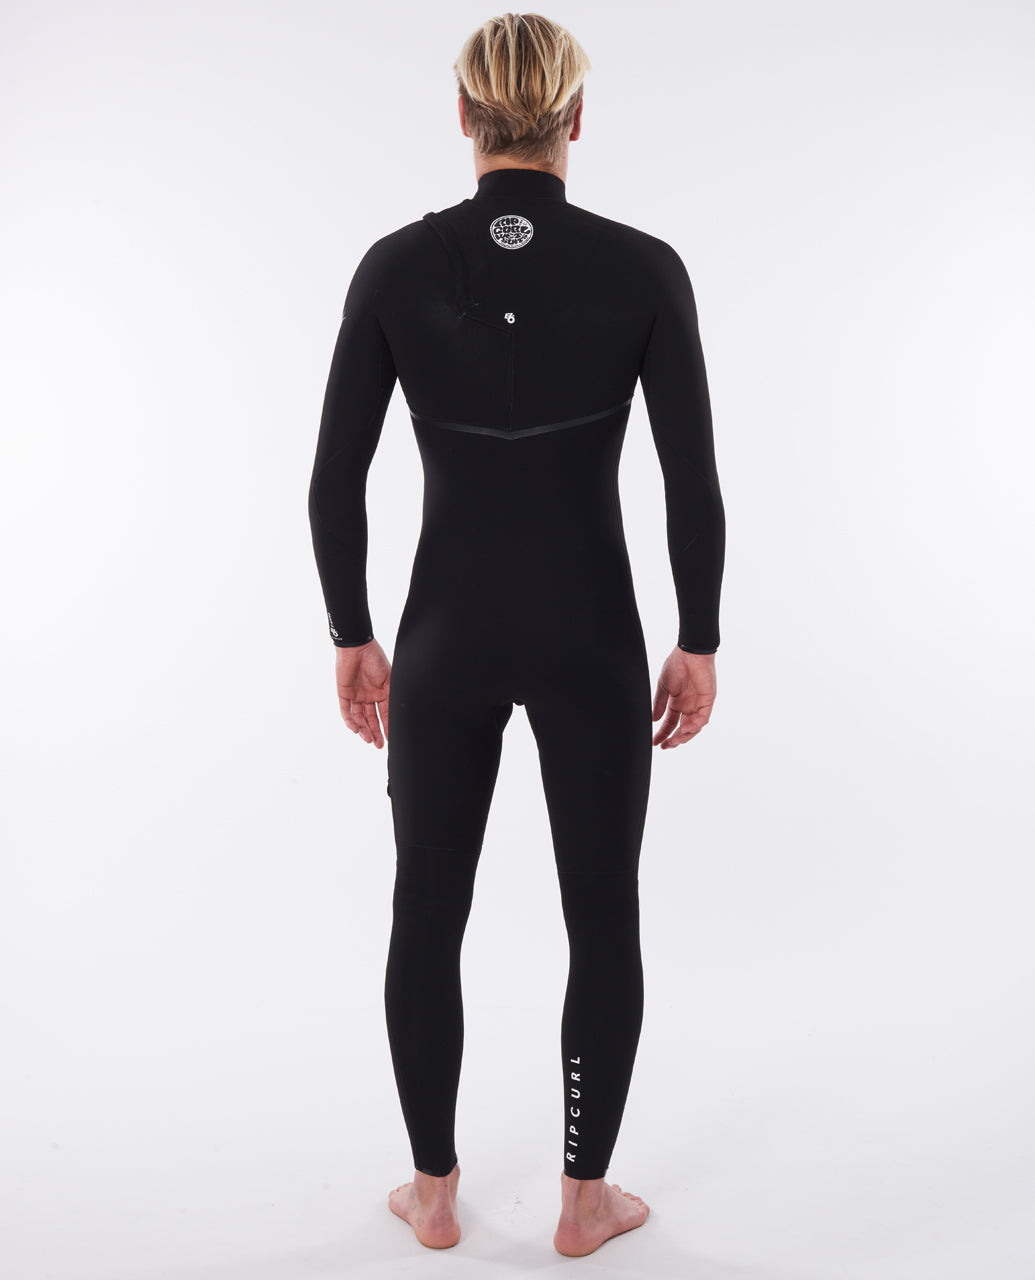 [SALE] [Spring/Autumn] Men's F BOMB E6 3/2mm Zip Free Full Suit Wetsuit